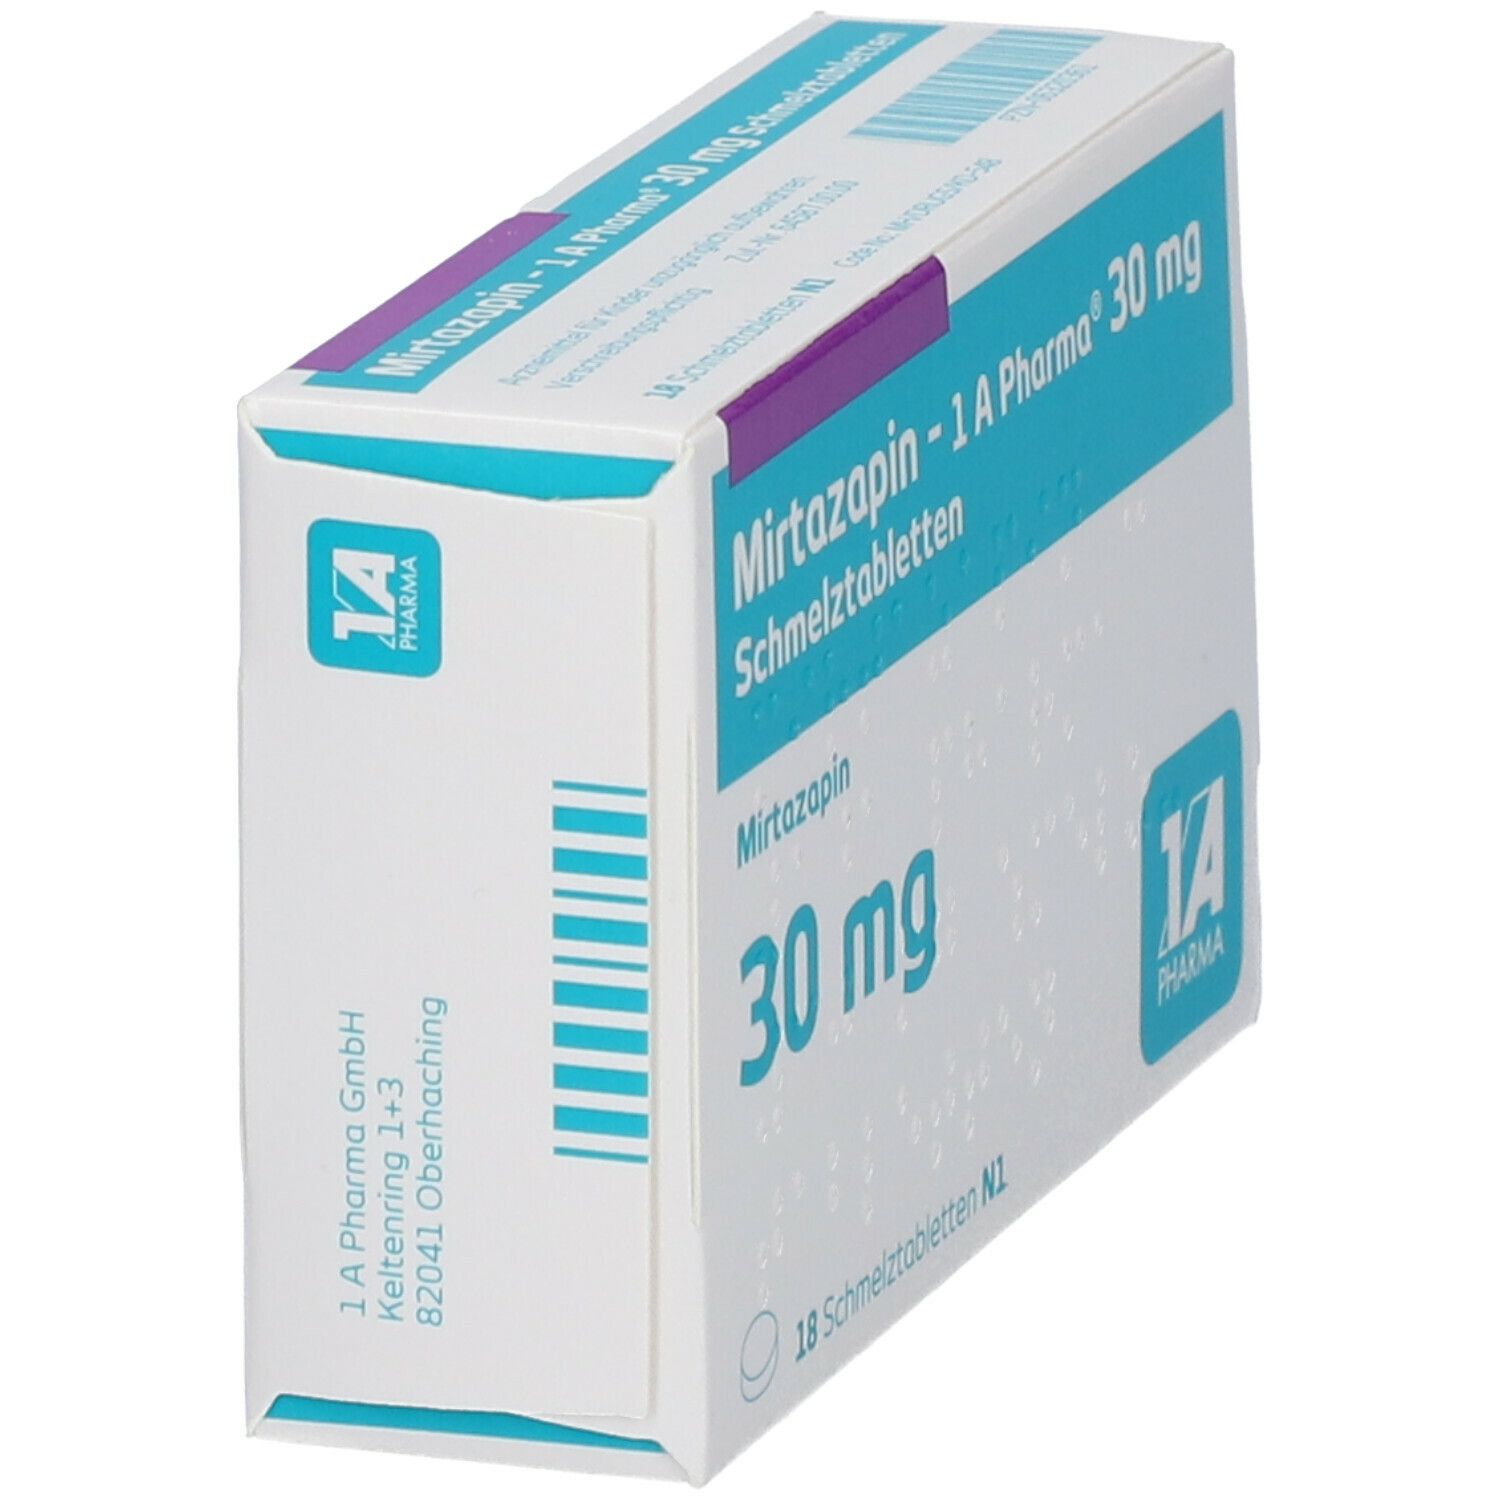 Mirtazapin - 1 A Pharma® 30 mg Schmelztabletten